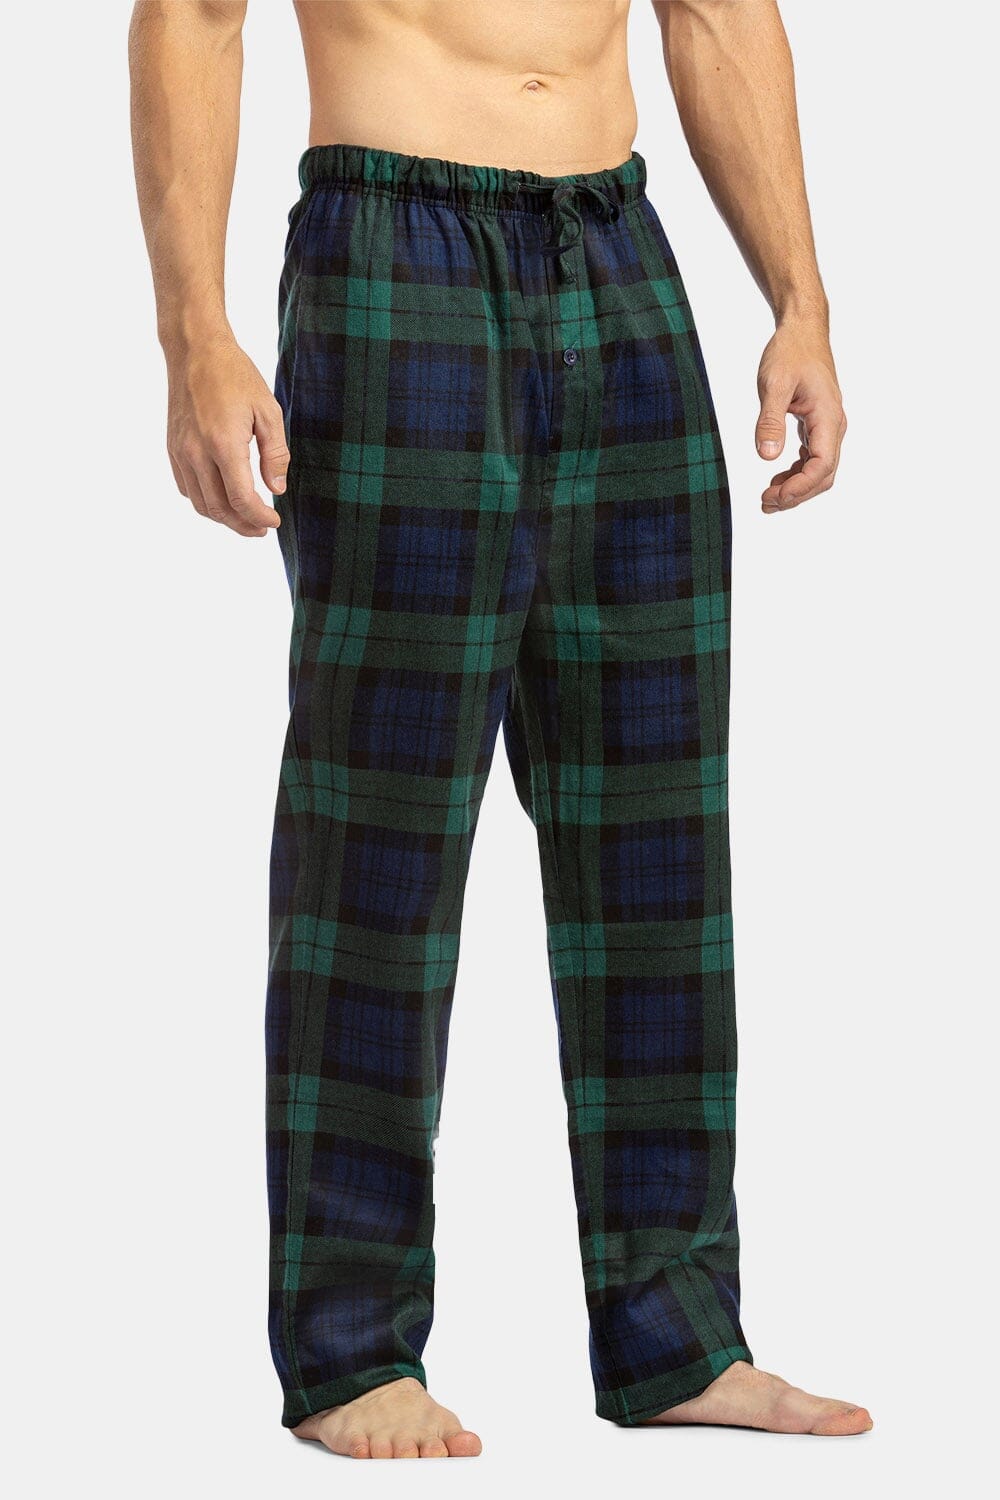 Men's Flannel Pajama Shorts - Super Soft Cotton Plaid Shorts with